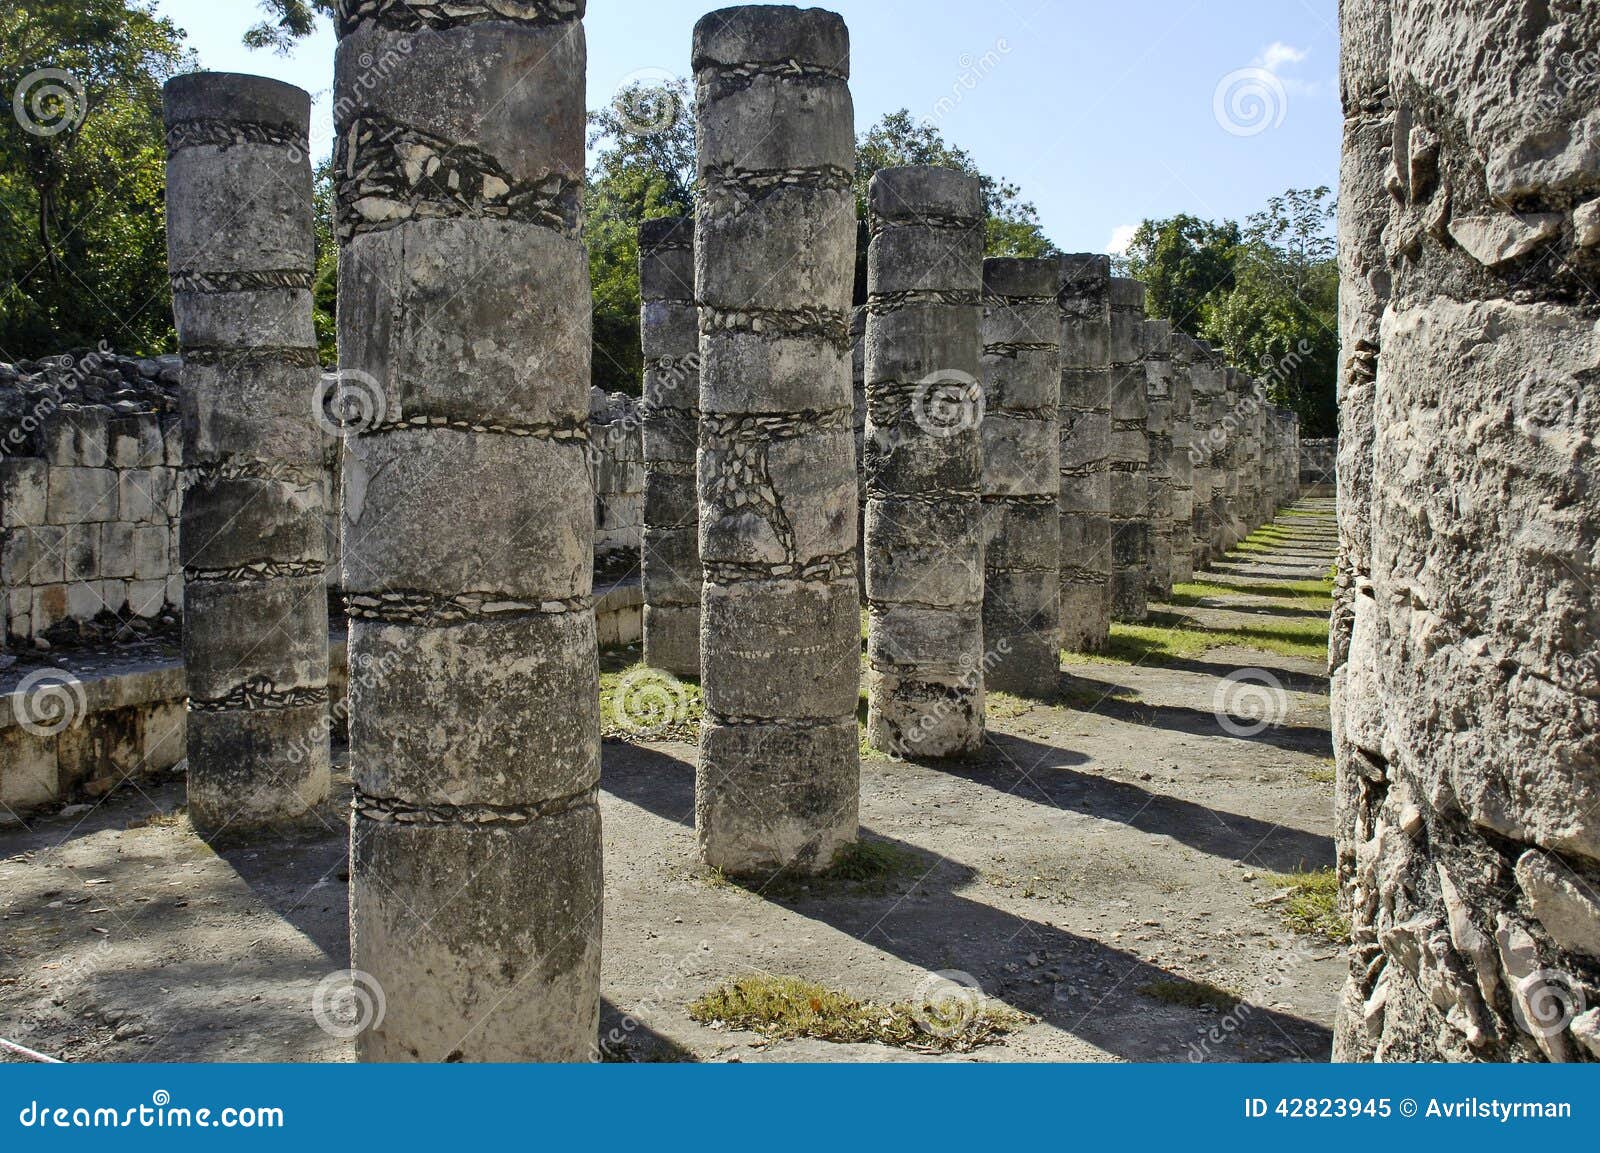 ancient pillars built by the mayas